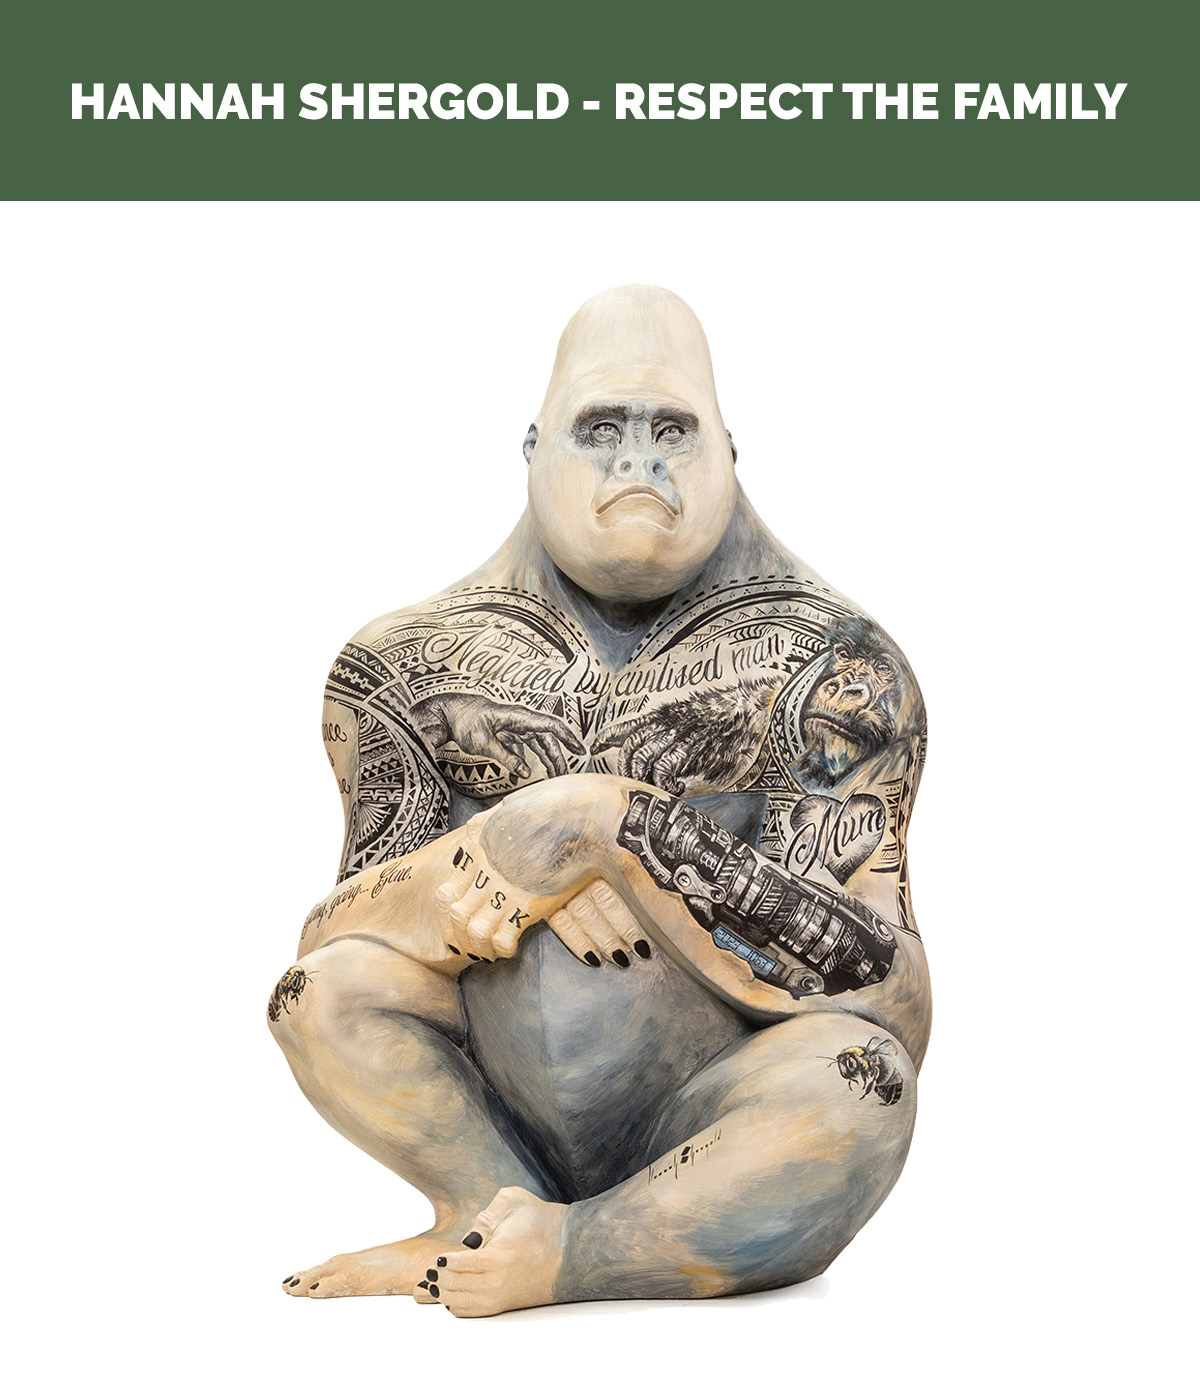 Hannah Shergold - Respect the family